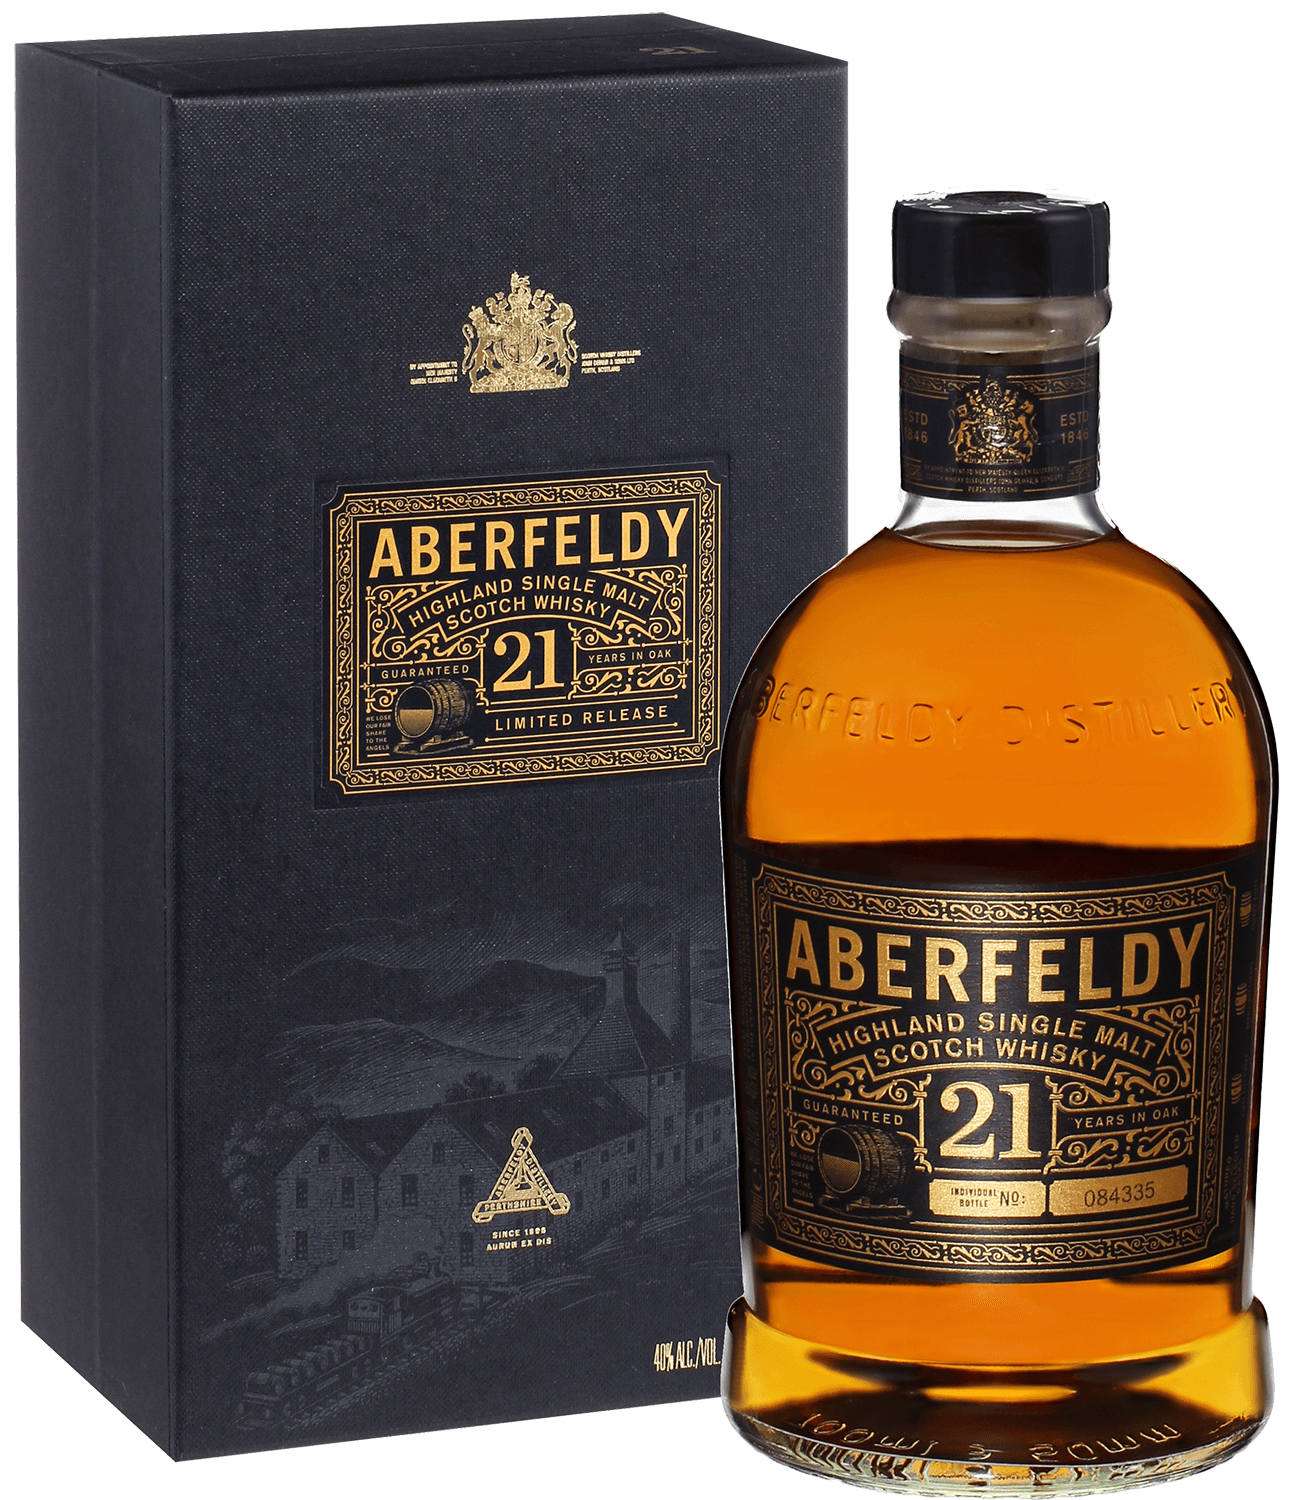 Aberfeldy 21 Years Old Highland Single Malt Scotch Whisky (gift box) glenfiddich 18 years old single malt scotch whisky gift box